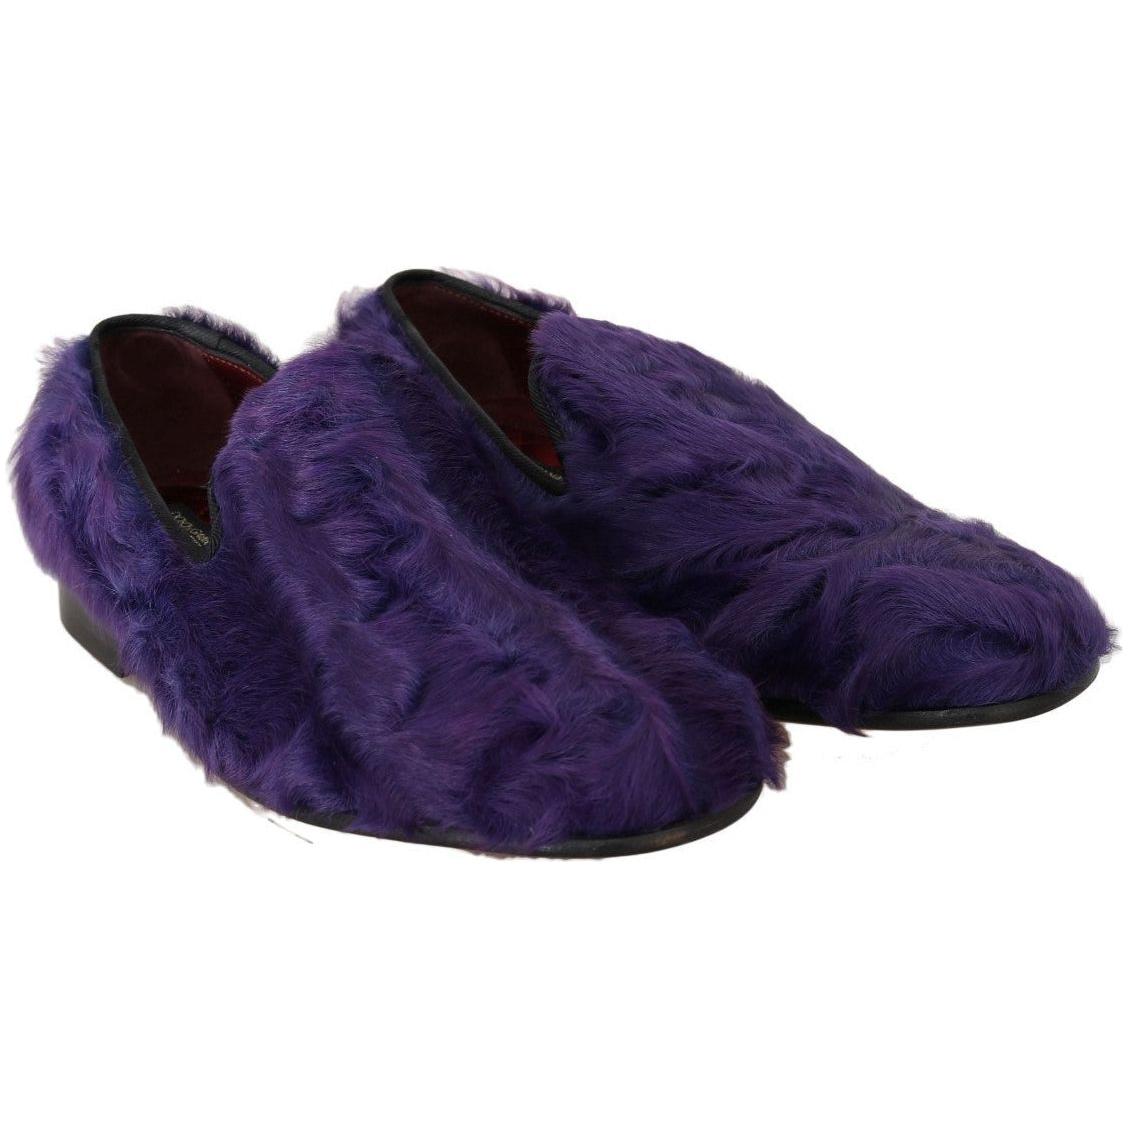 Dolce & Gabbana Plush Purple Sheep Fur Loafers purple-sheep-fur-leather-loafers 466240-purple-sheep-fur-leather-loafers-7.jpg